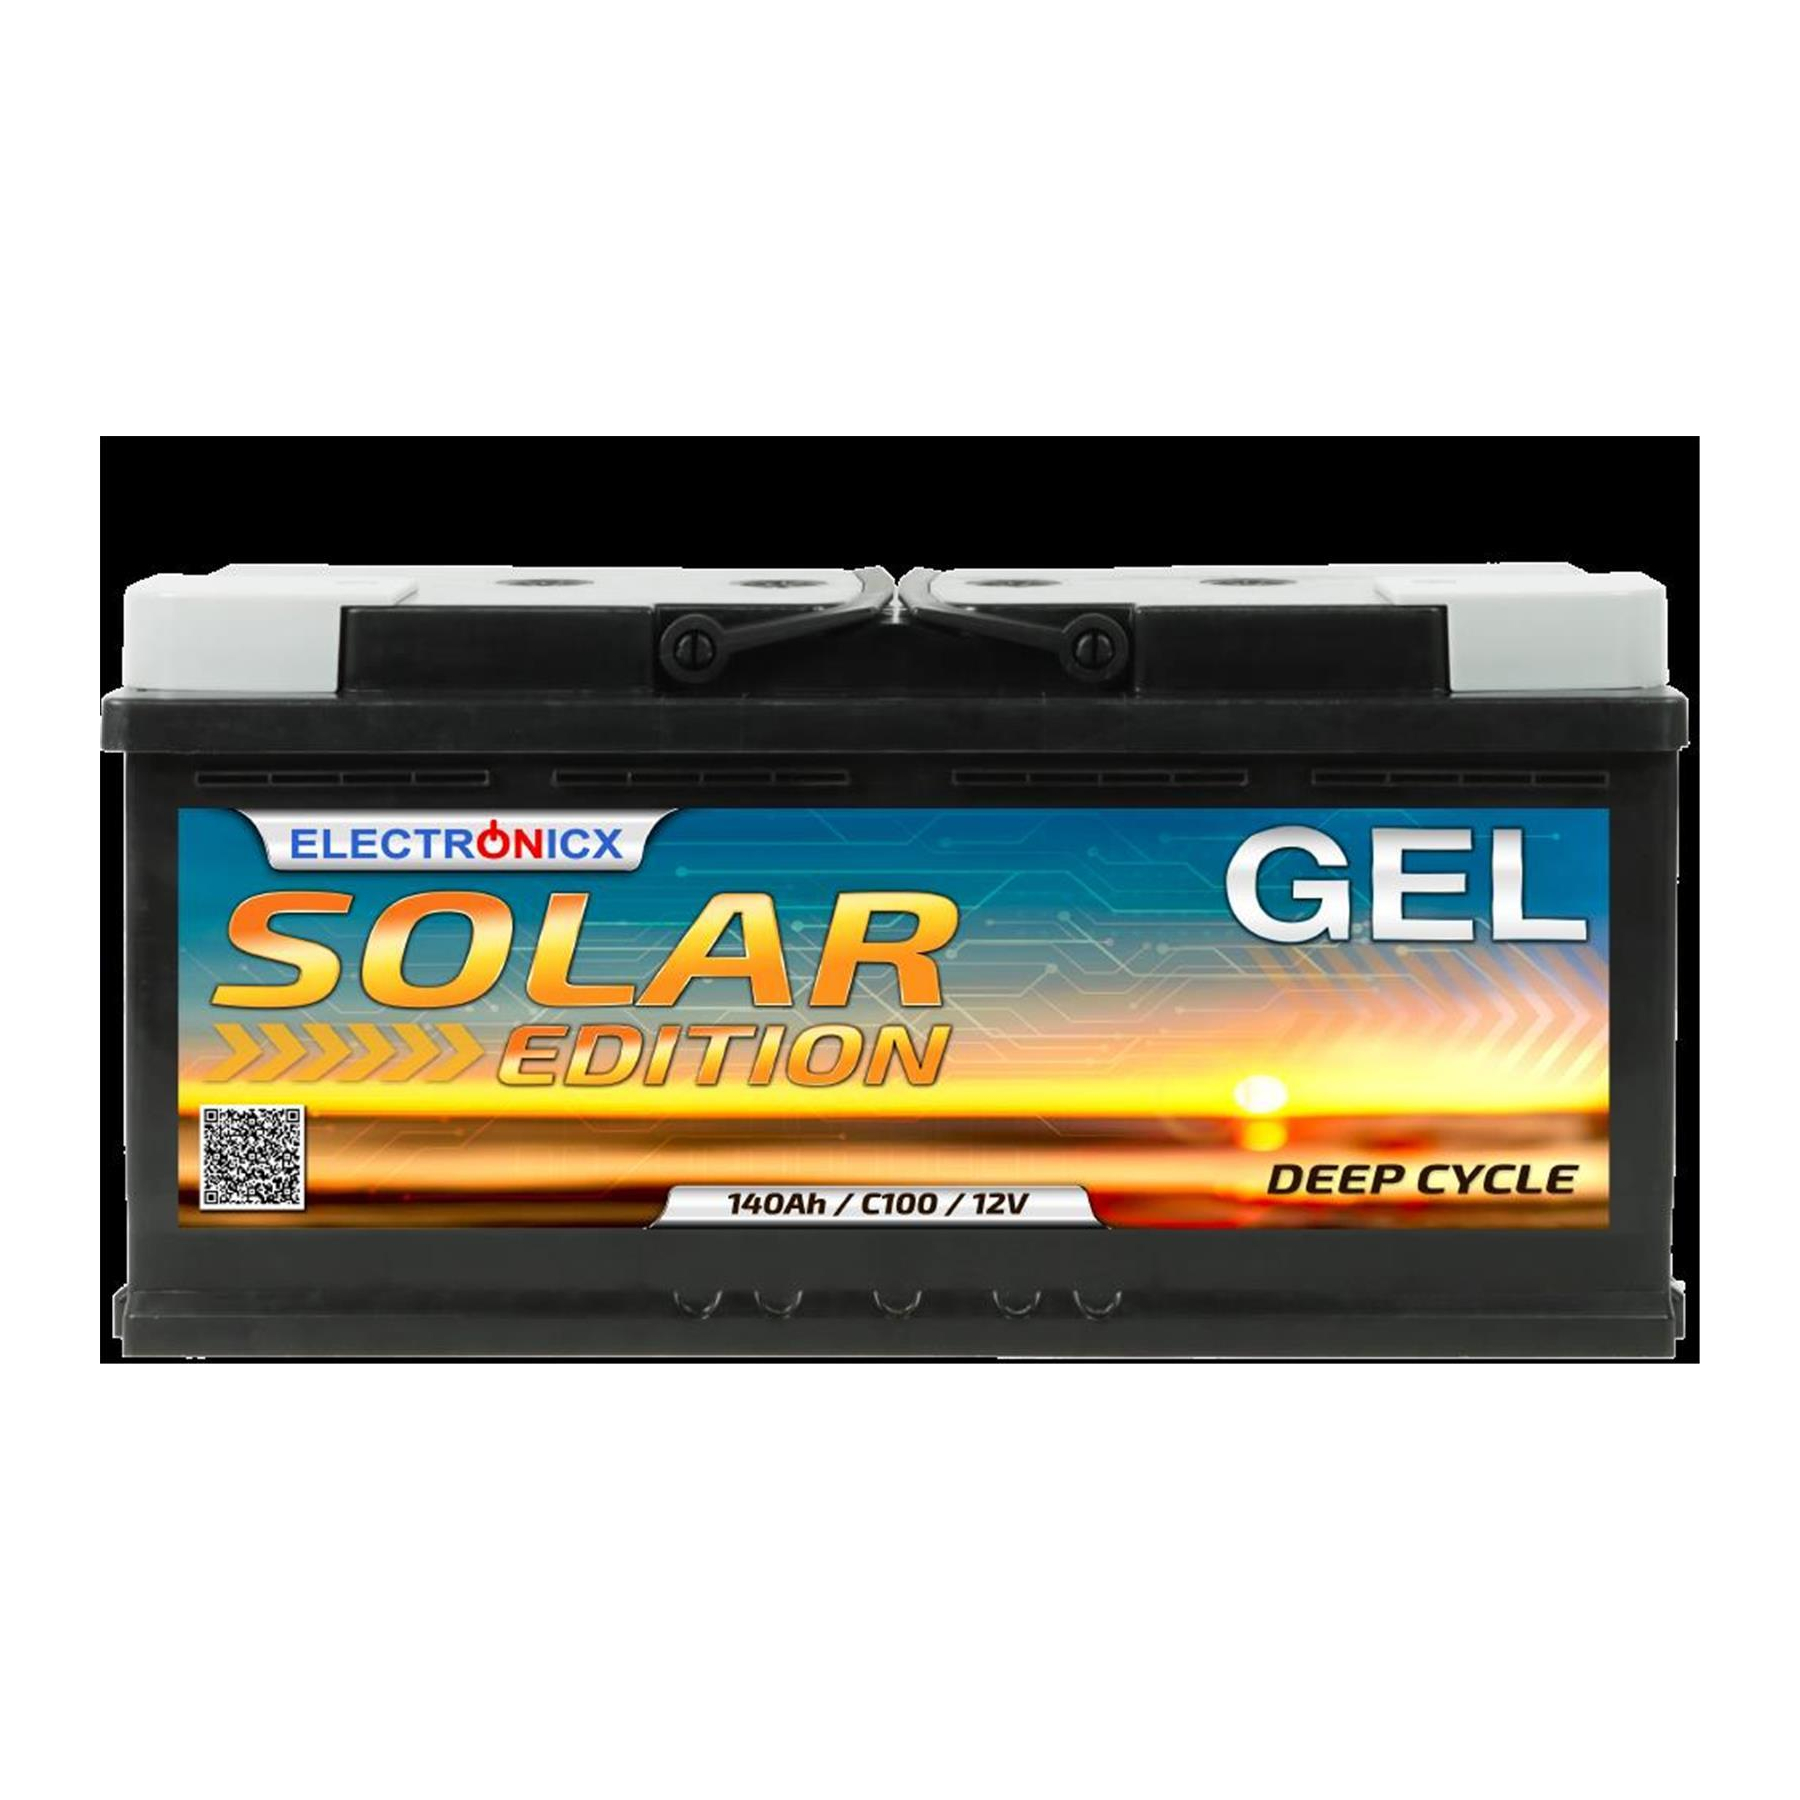 Solarbatterie 12V 140 AH Electronicx Solar Edition GEL, 189,99 €